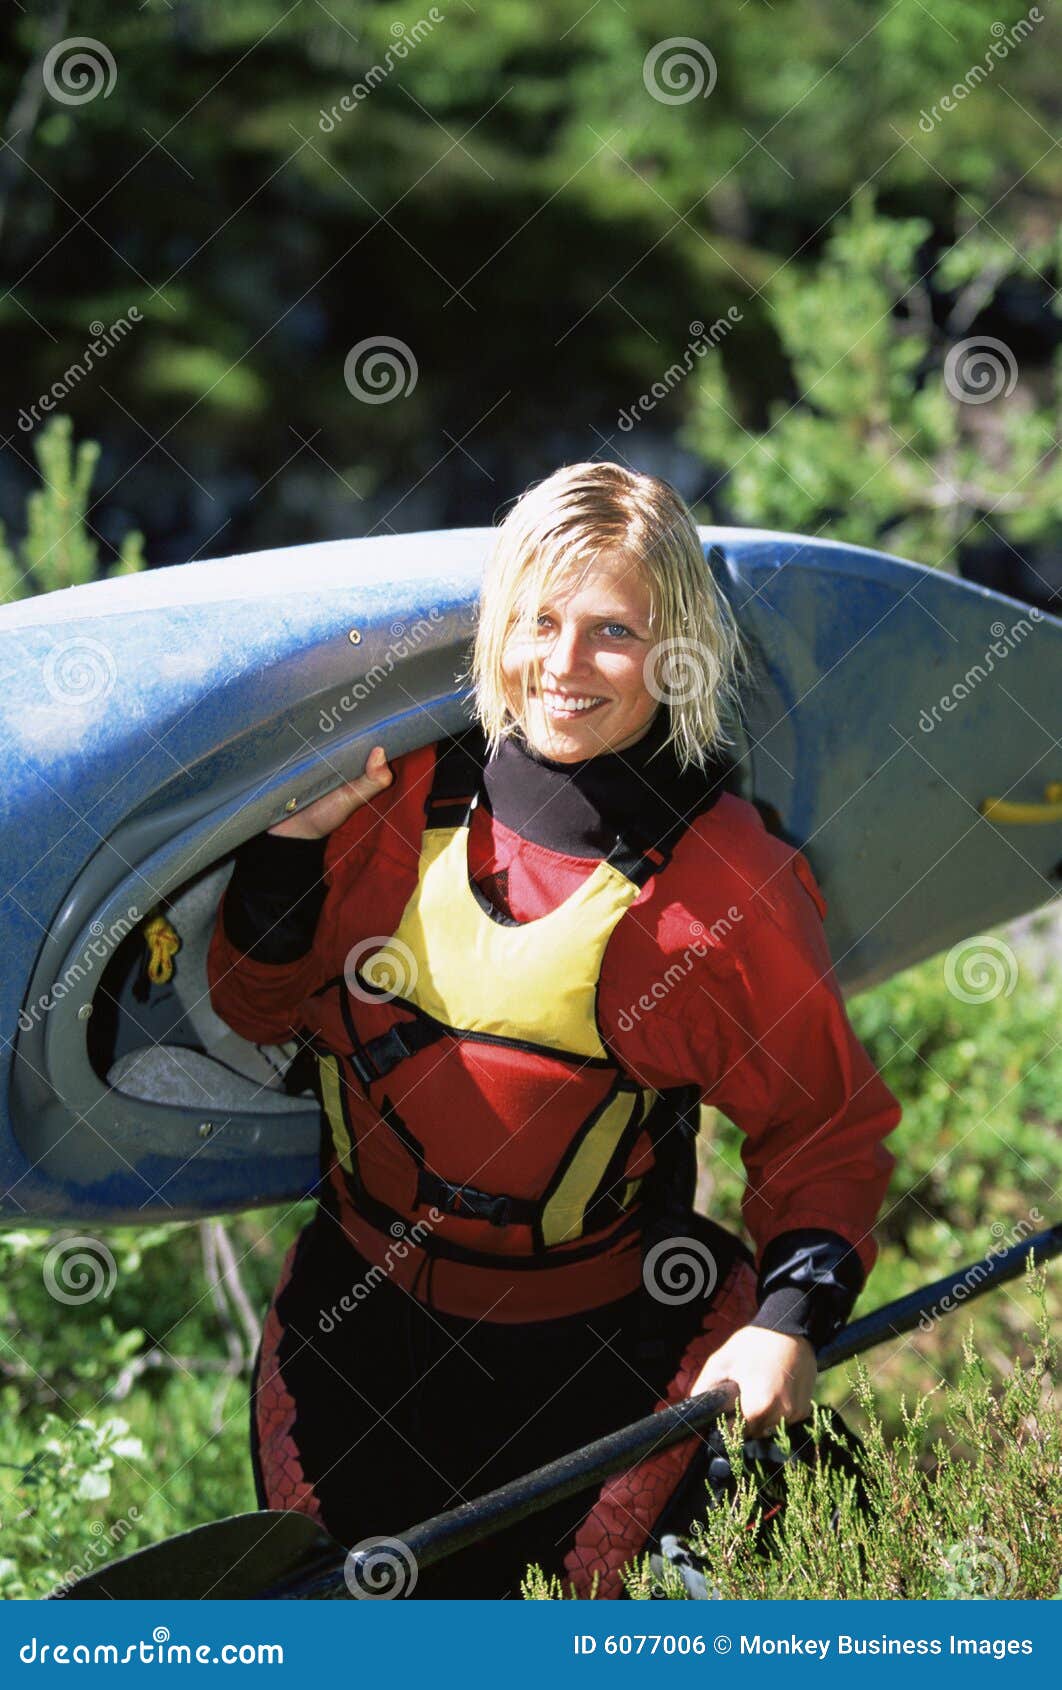 Young Woman Carrying Kayak Royalty Free Stock Image ...